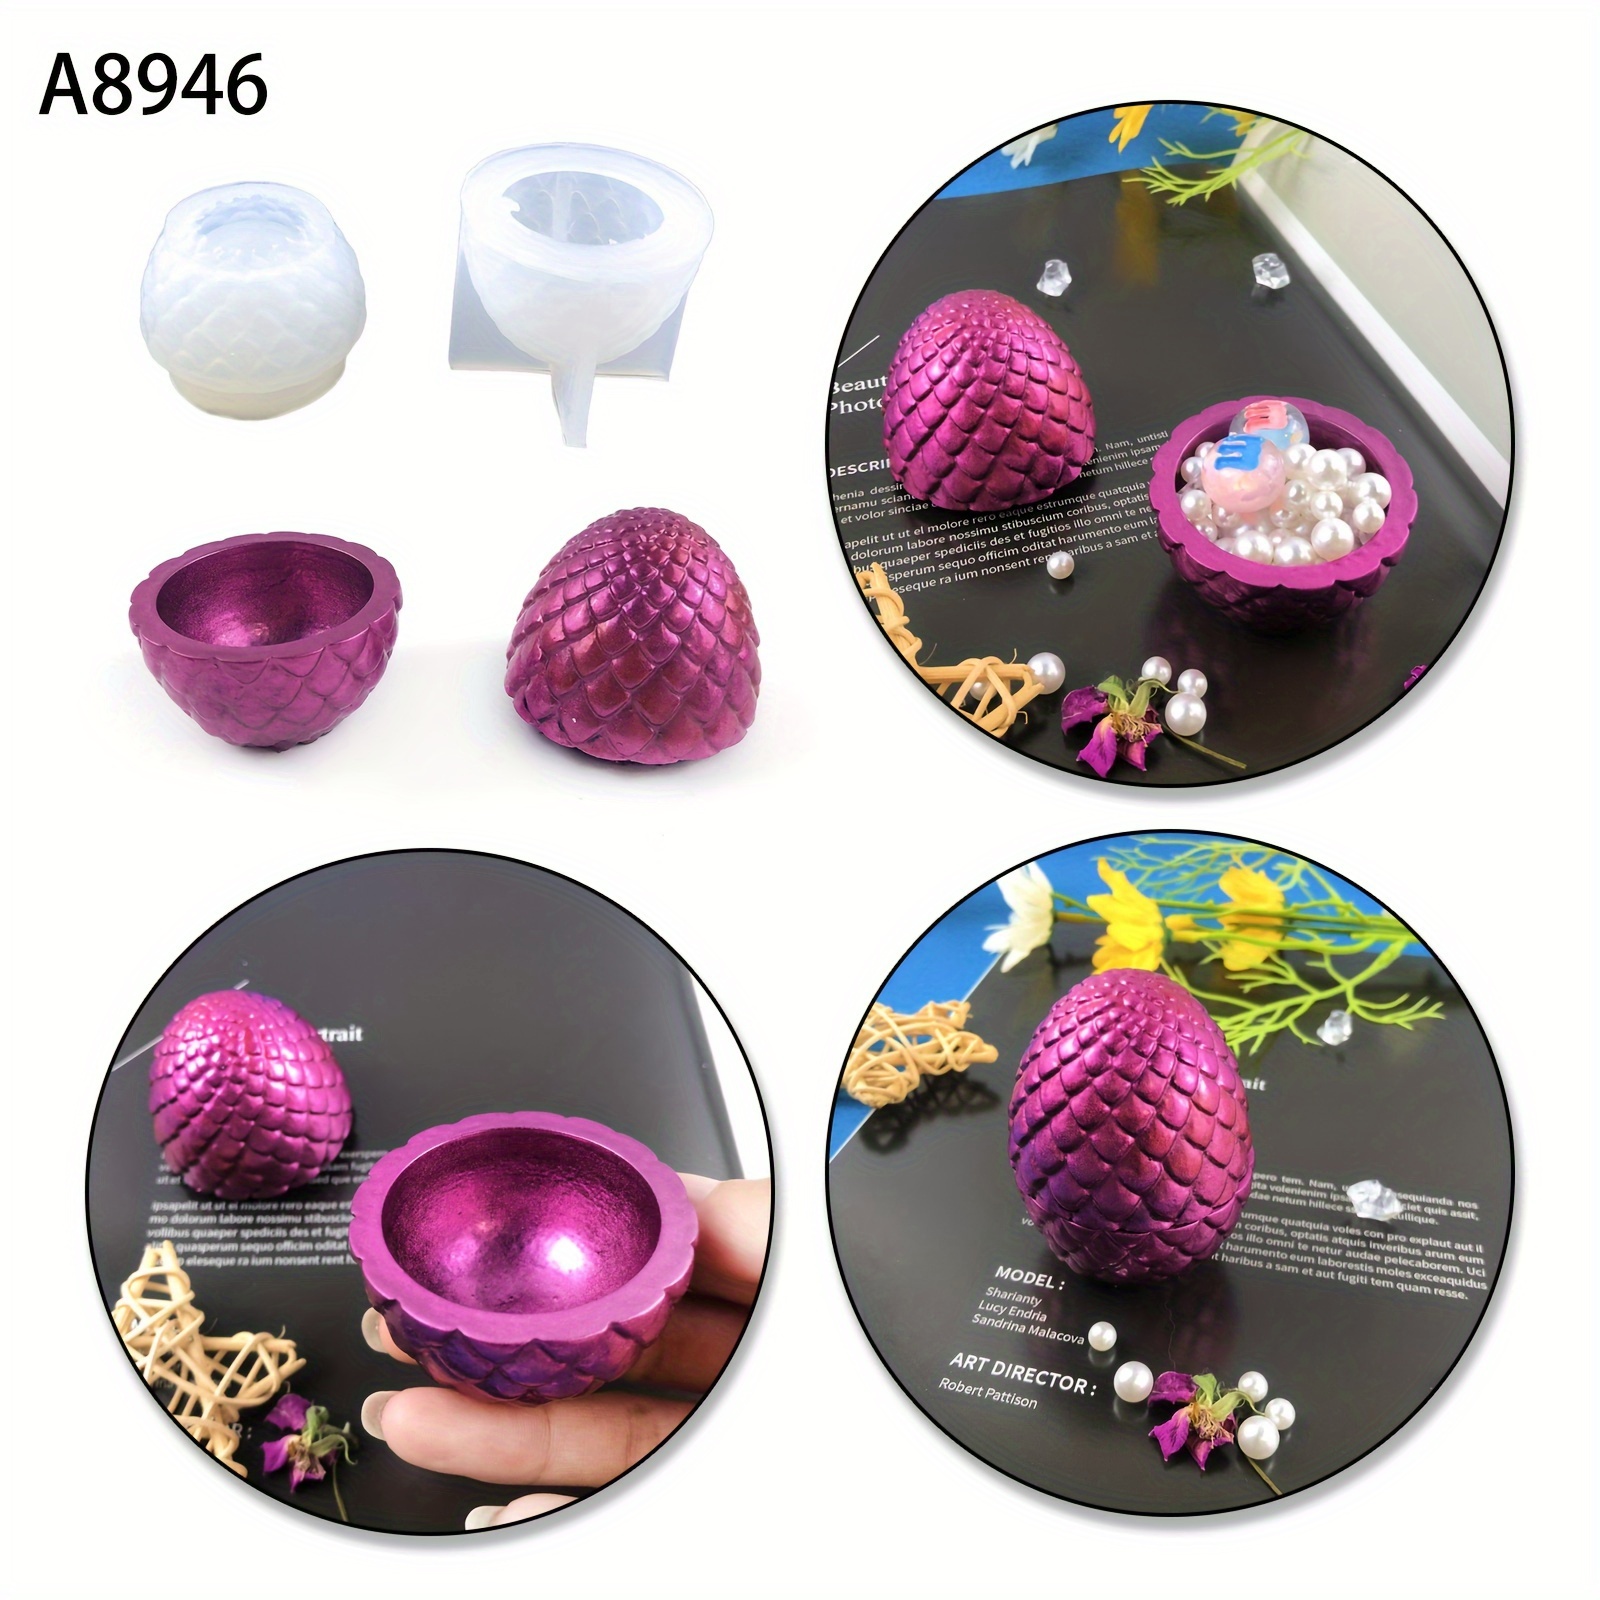 Dragon Egg Mold Silicone 3D Dragons Plaster Casting Mold DIY Resin